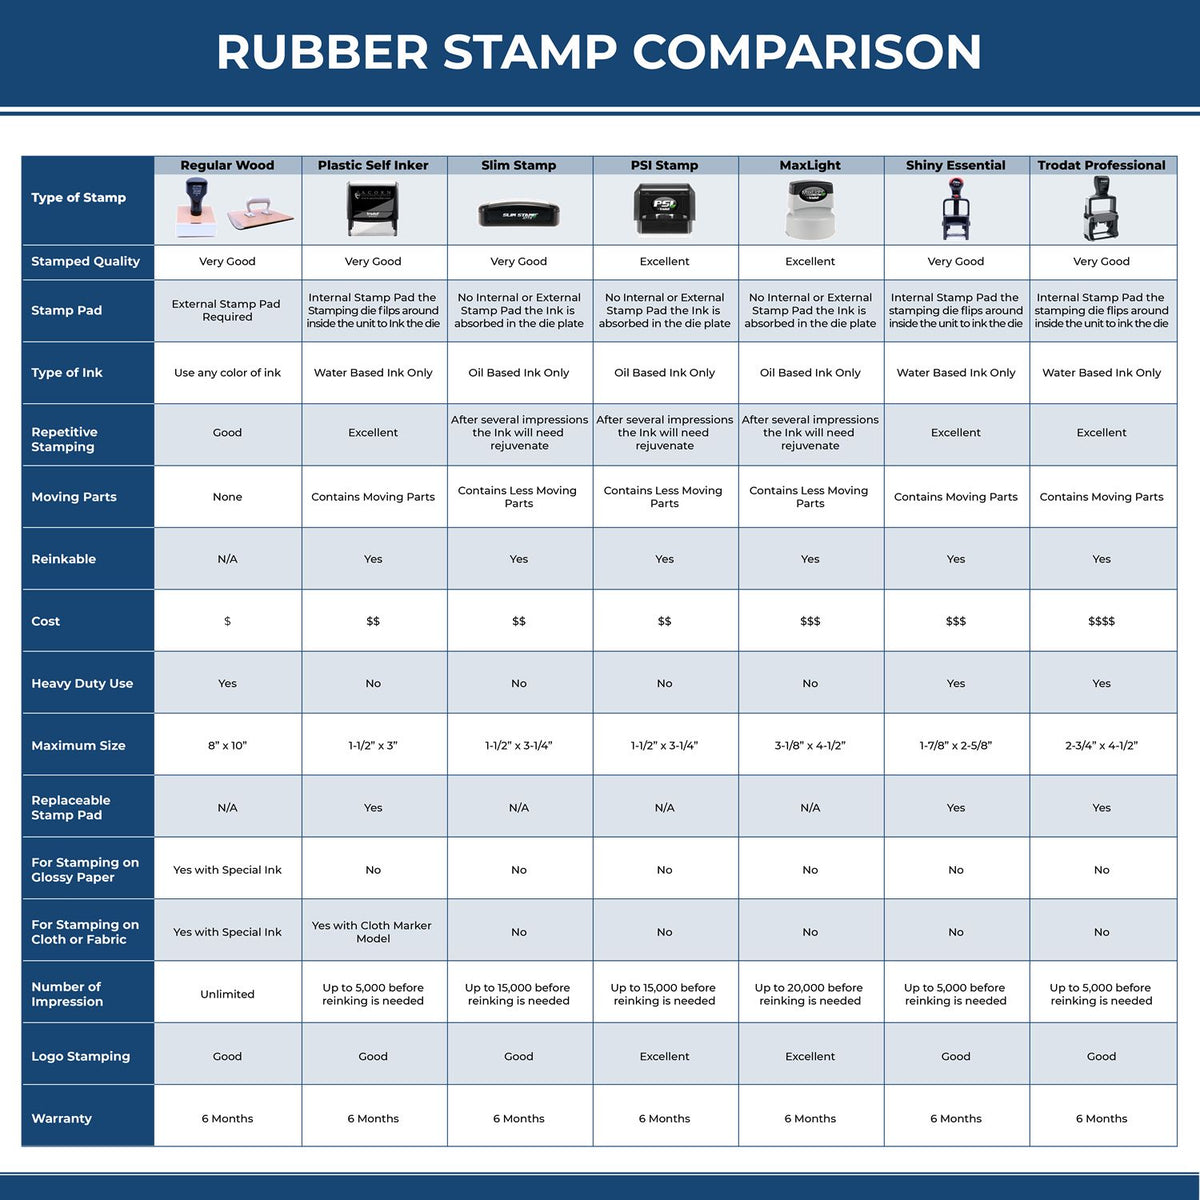 Return Receipt Requested Xstamper Stamp 5043 Rubber Stamp Comparison